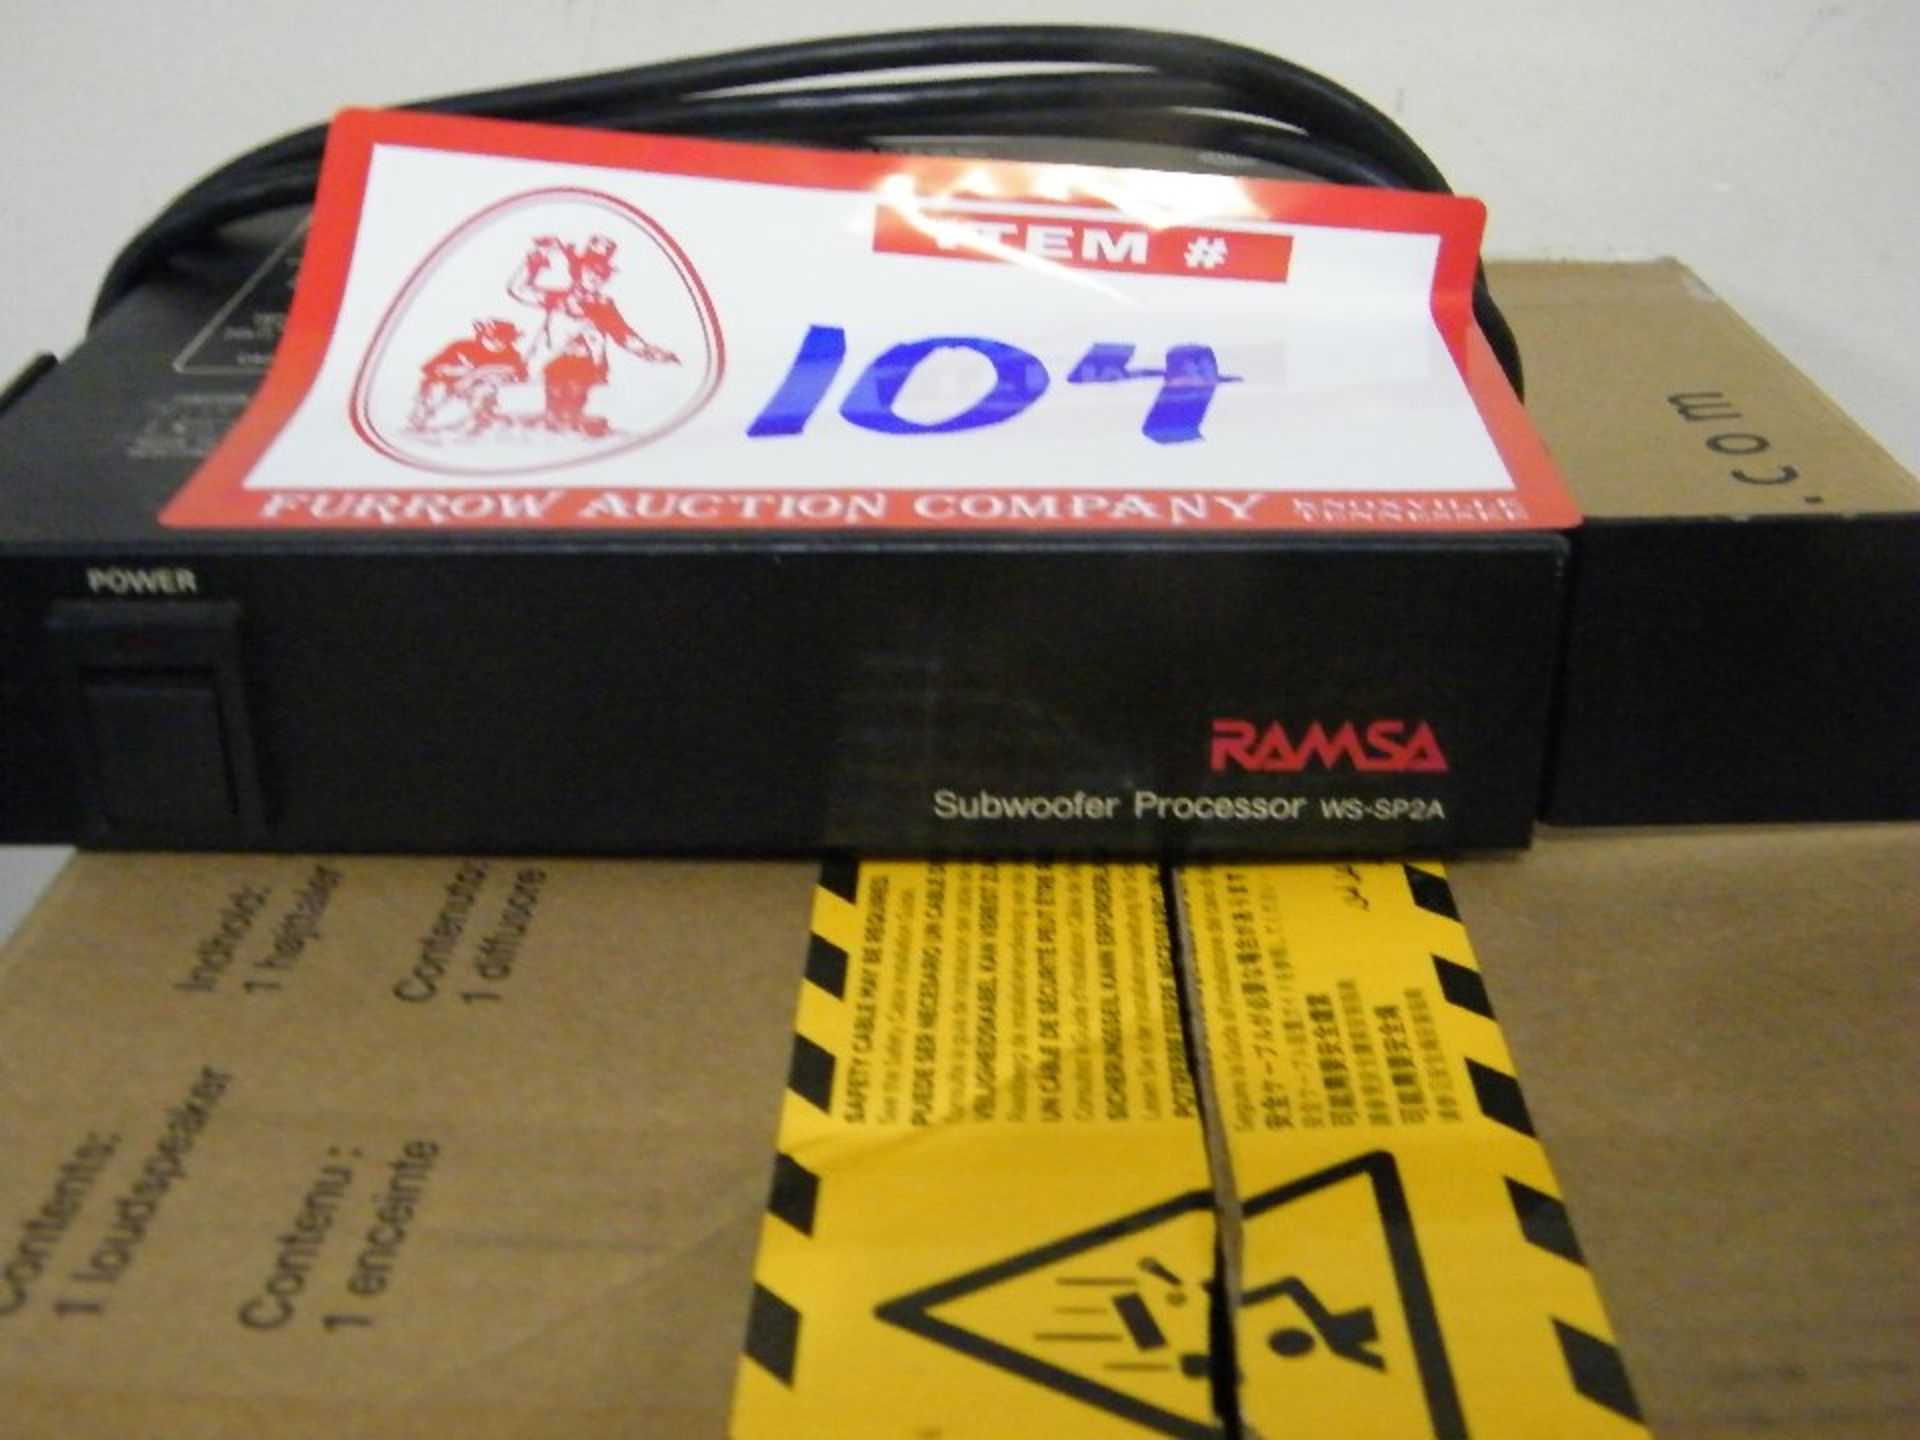 Ramsa PWS-SP2A sub Processor